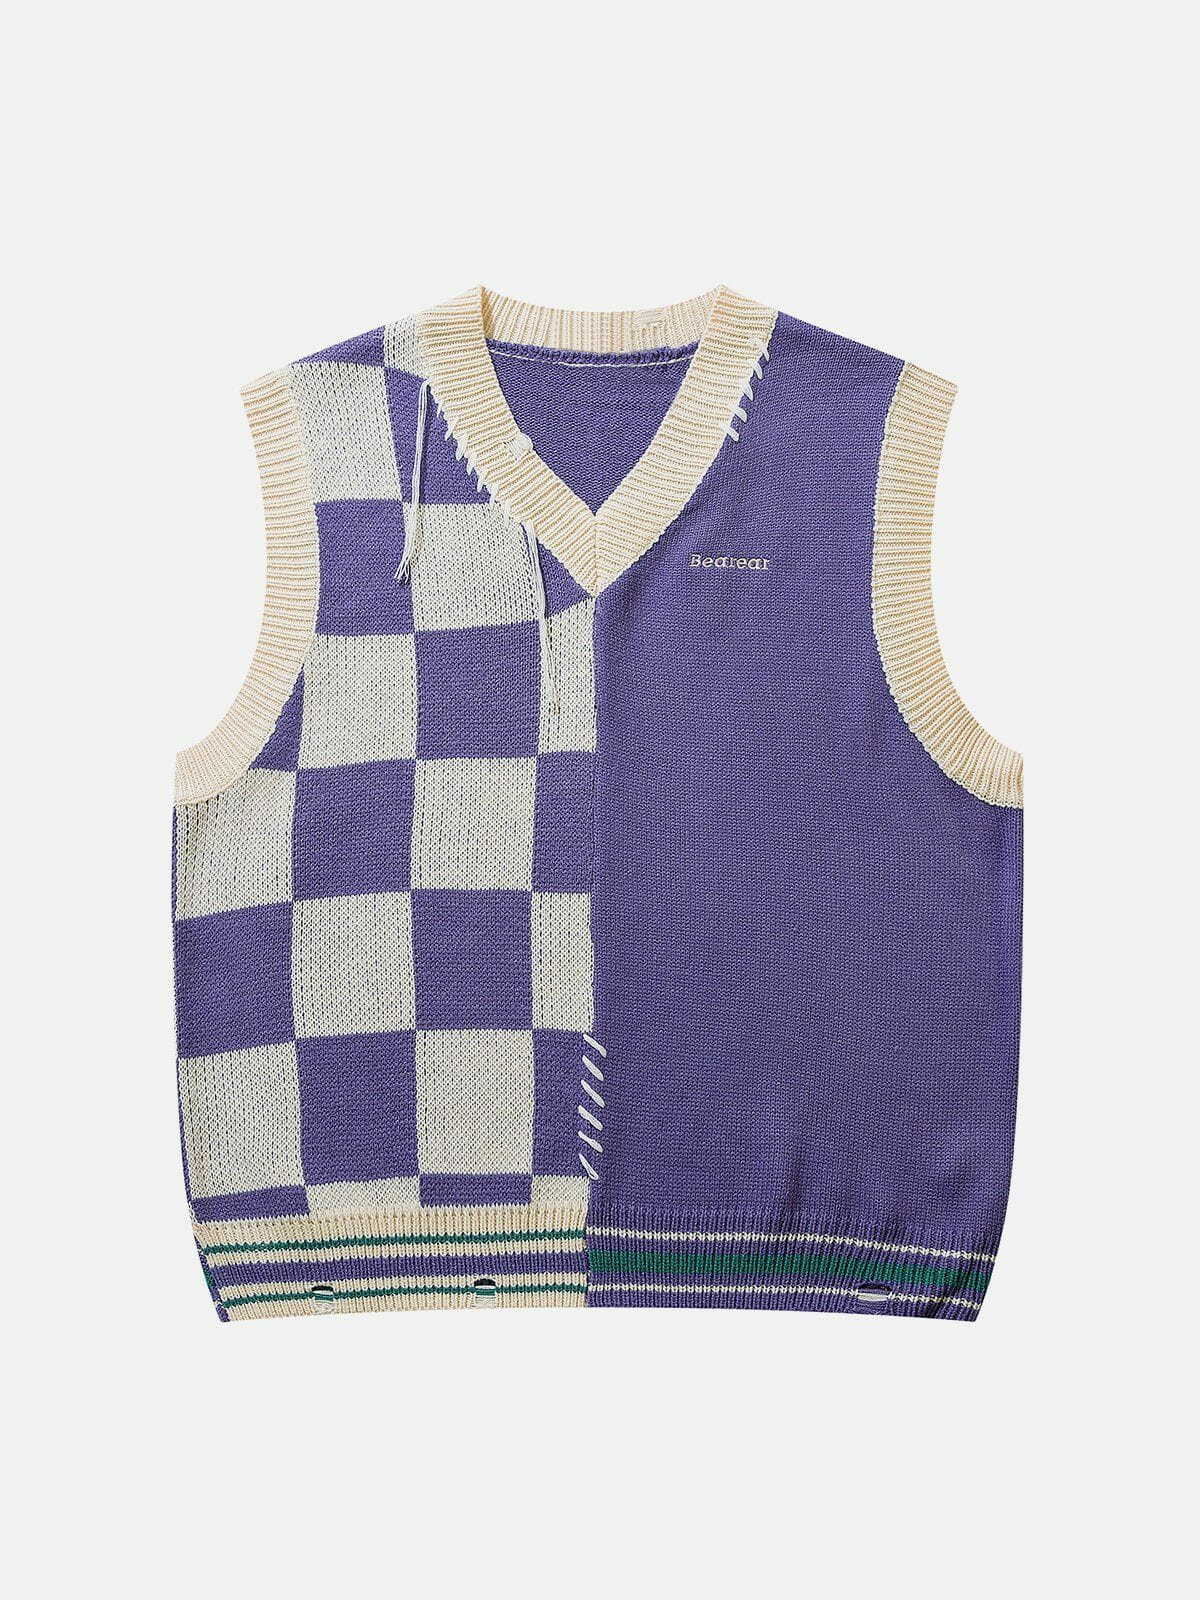 plaid patchwork vest edgy & retro streetwear 8823